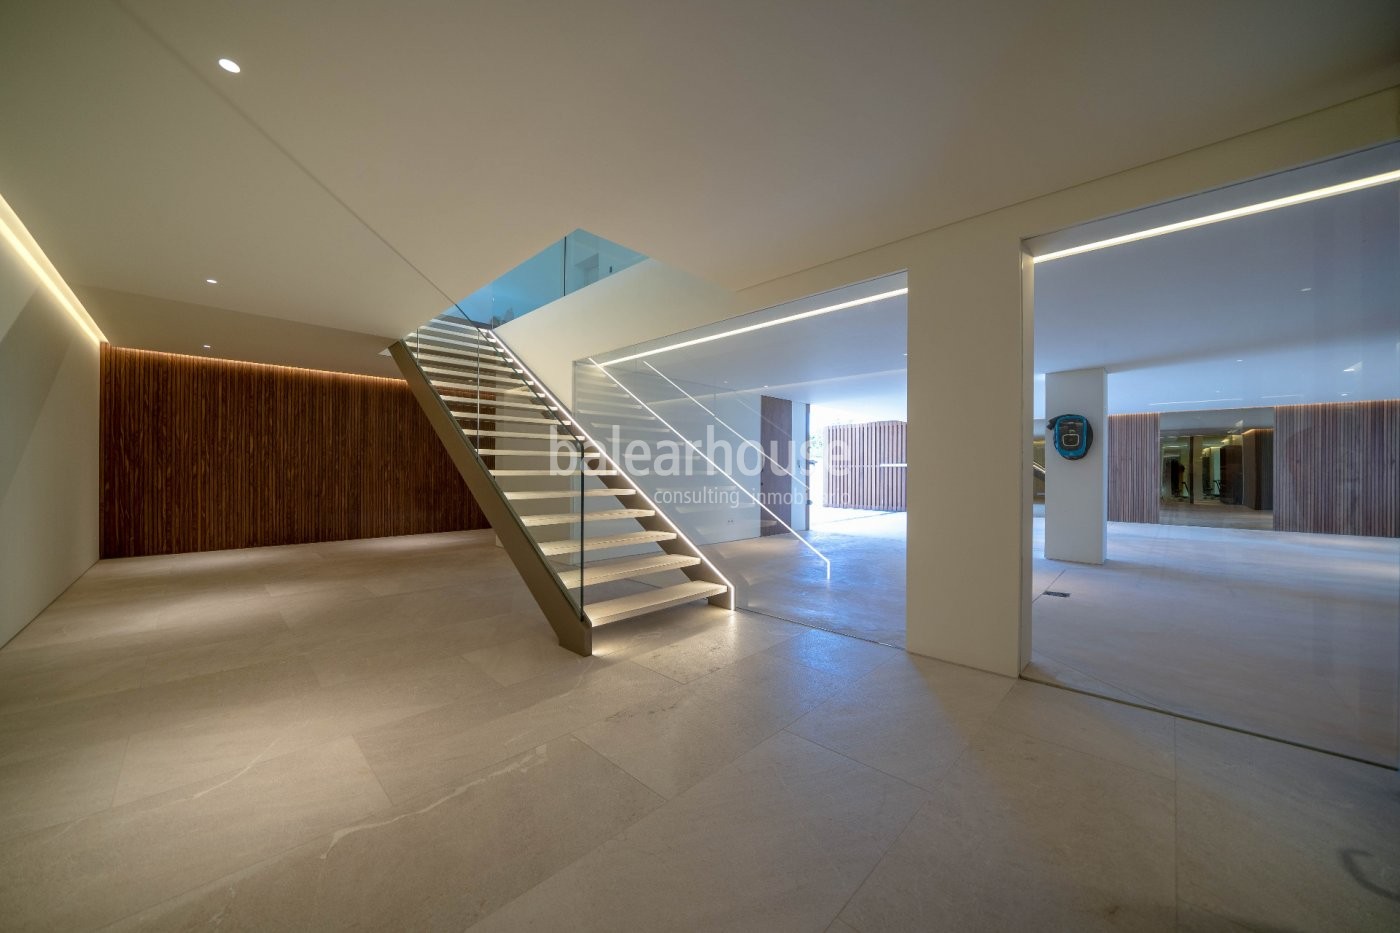 Avantgarde und Design mit atemberaubendem Meerblick in dieser neu gebauten Villa in Son Vida.